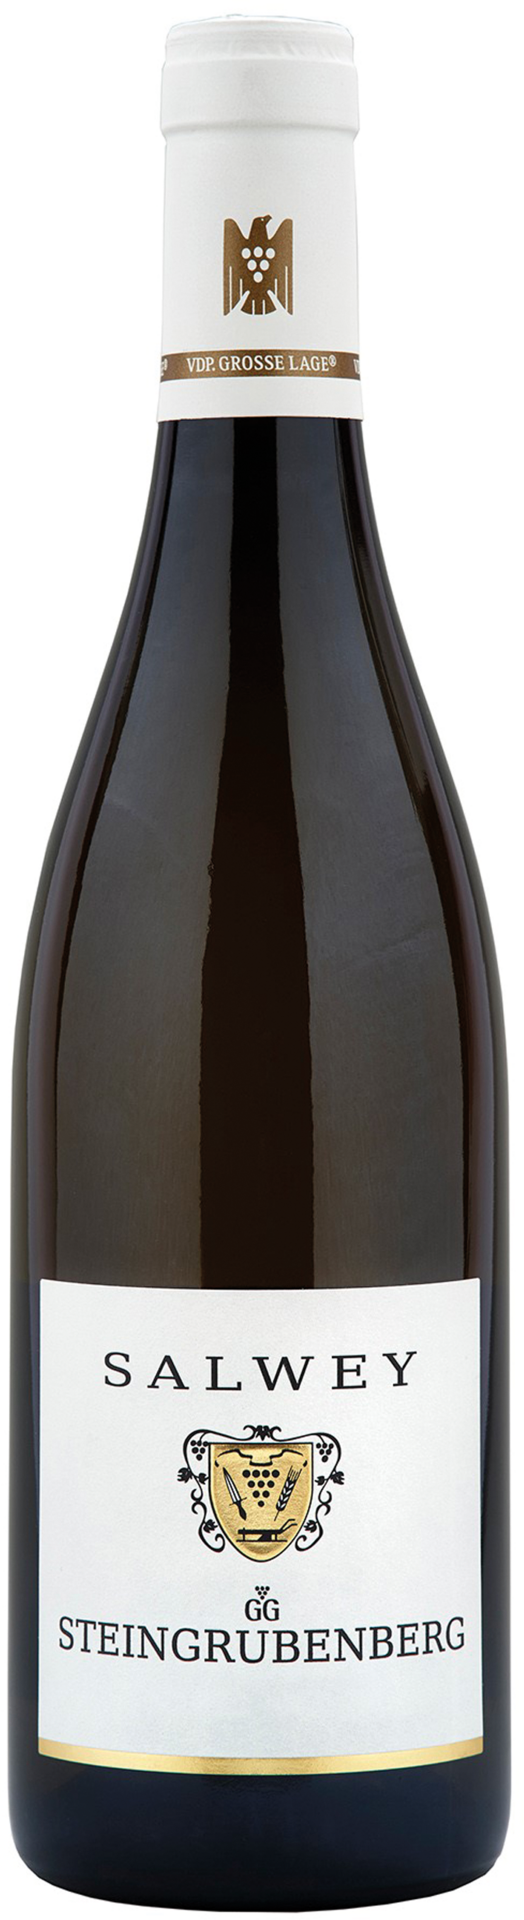 Steingrubenberg Chardonnay GG